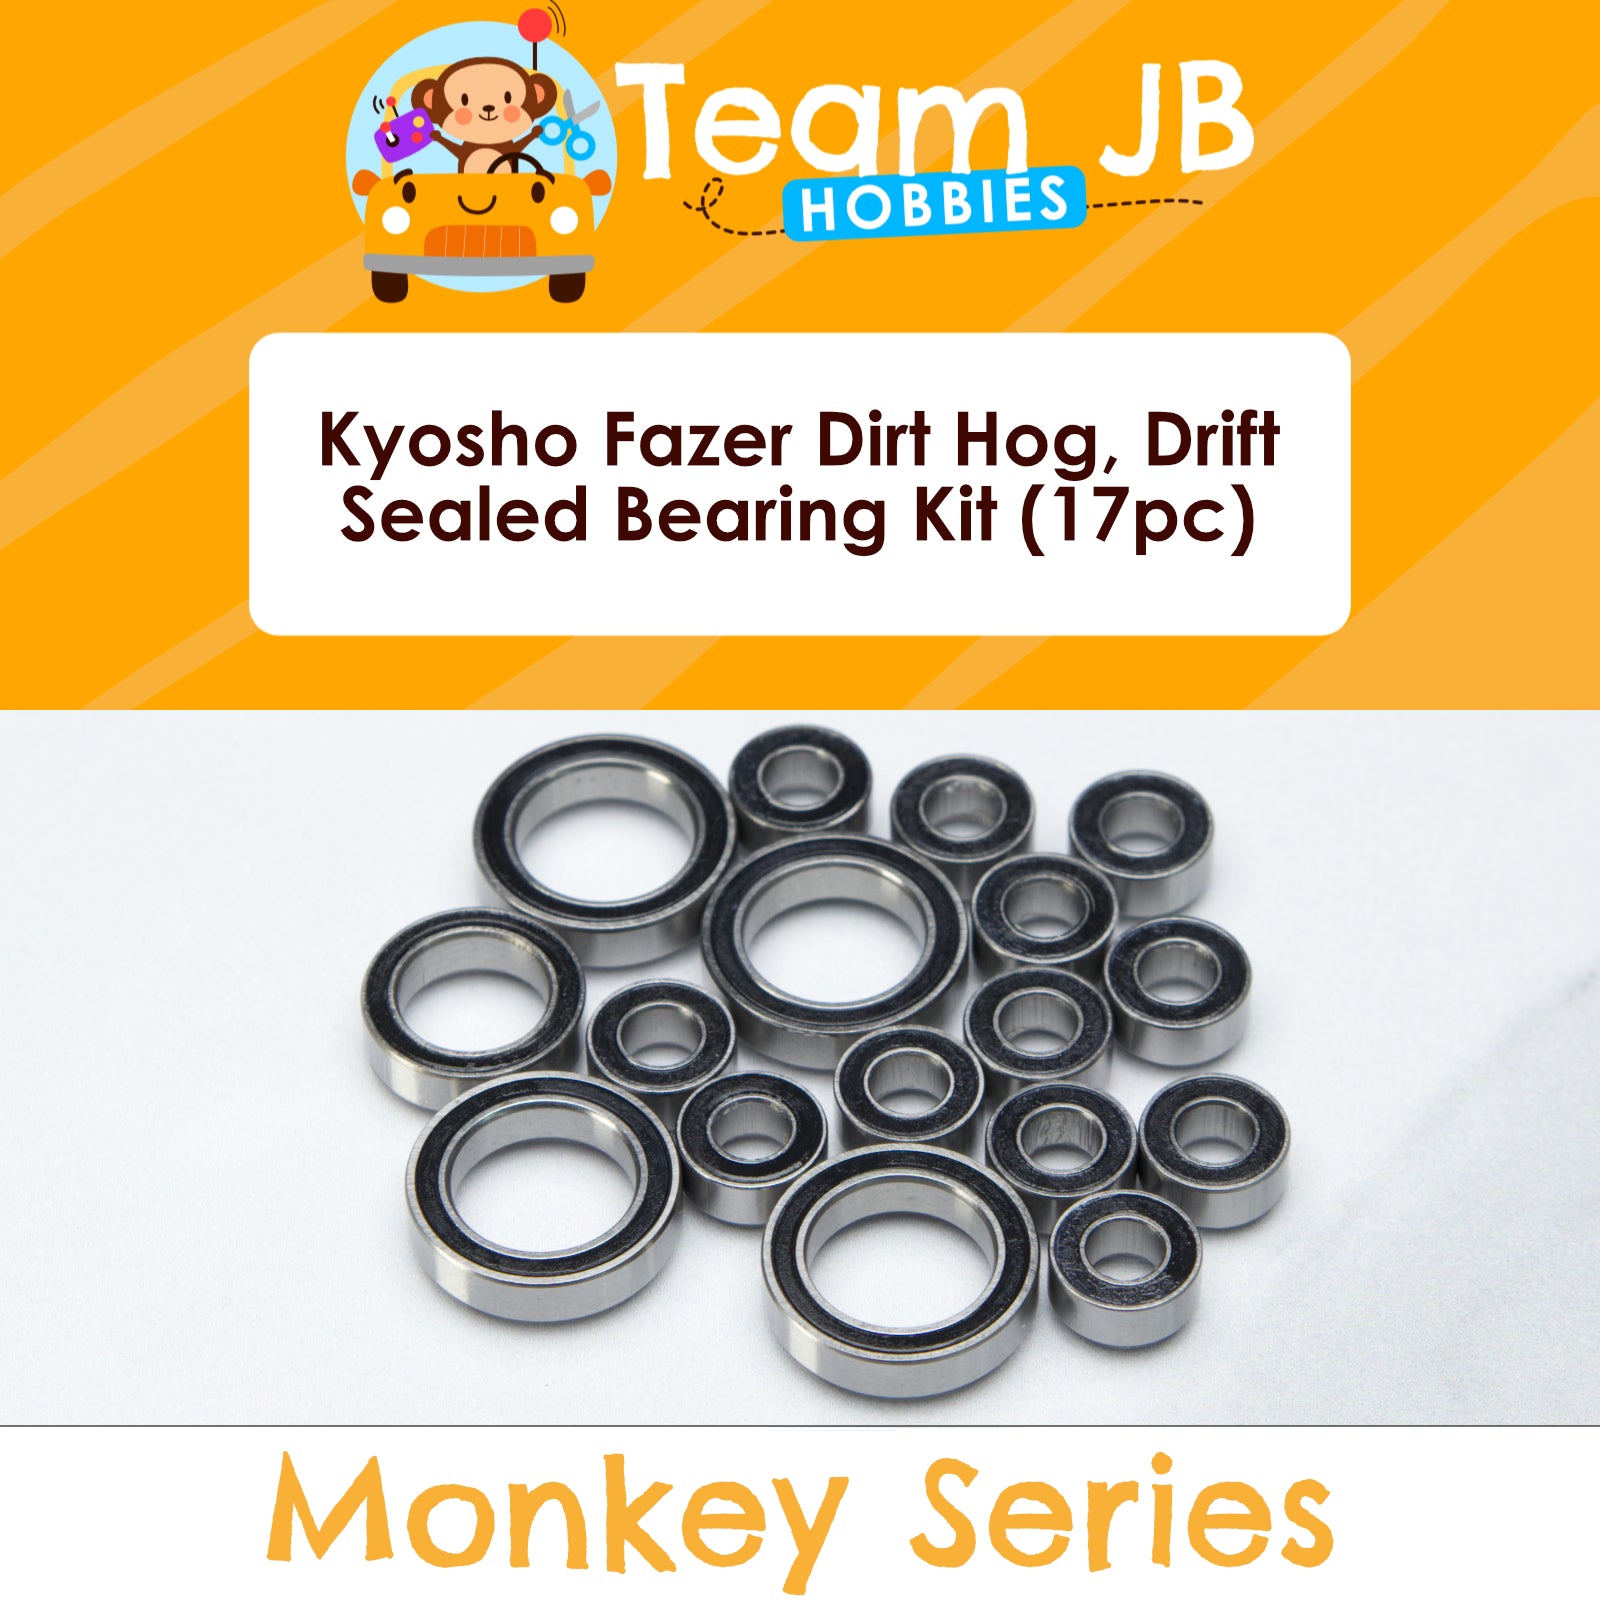 Kyosho Fazer Dirt Hog, Drift - Sealed Bearing Kit